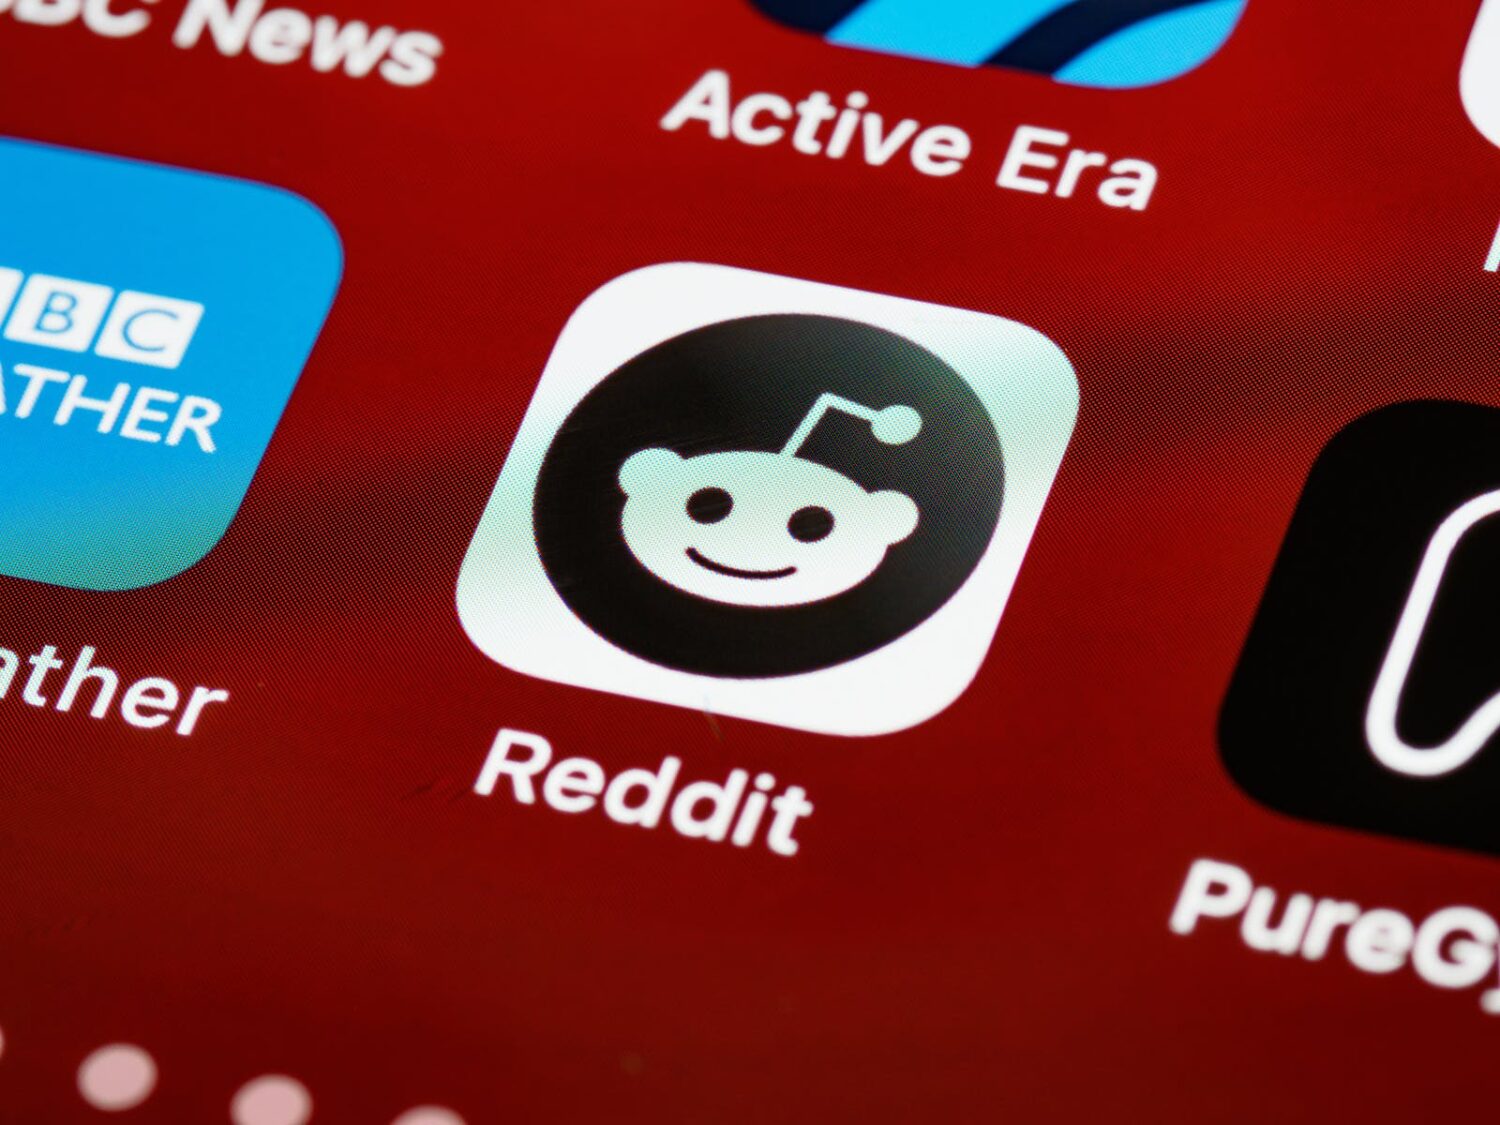 Reddit app on an iphone